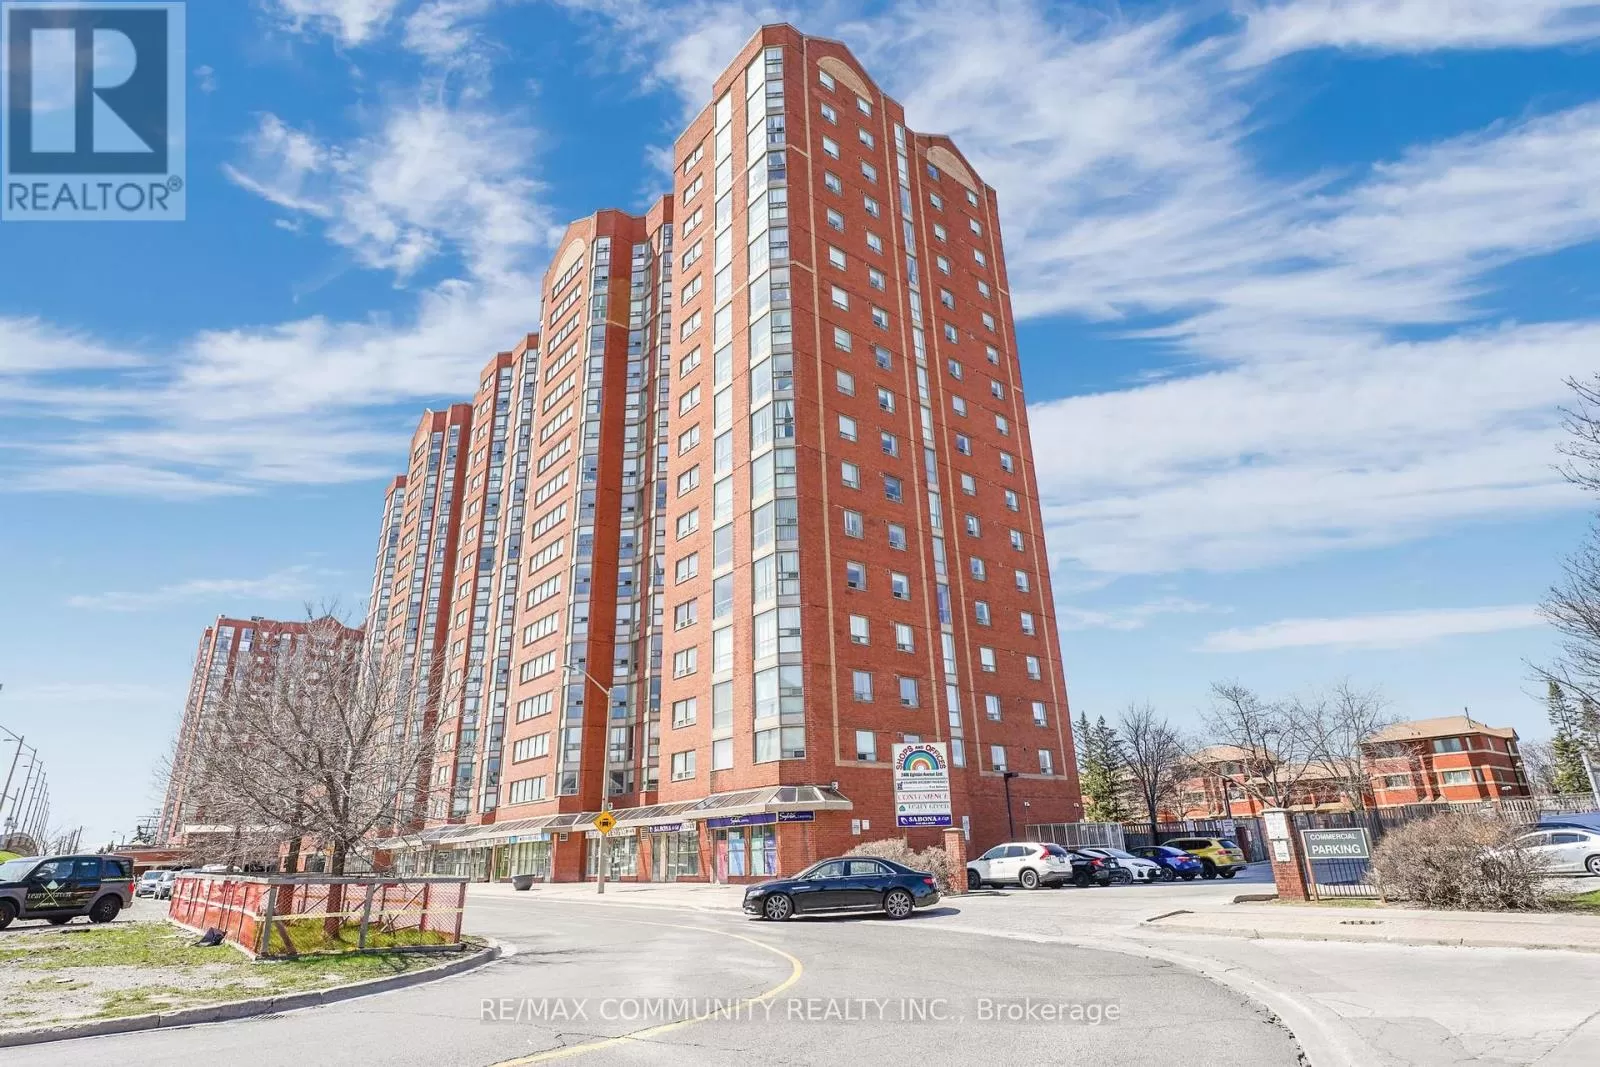 Apartment for rent: 218 - 2466 Eglinton Avenue E, Toronto, Ontario M1K 5J8